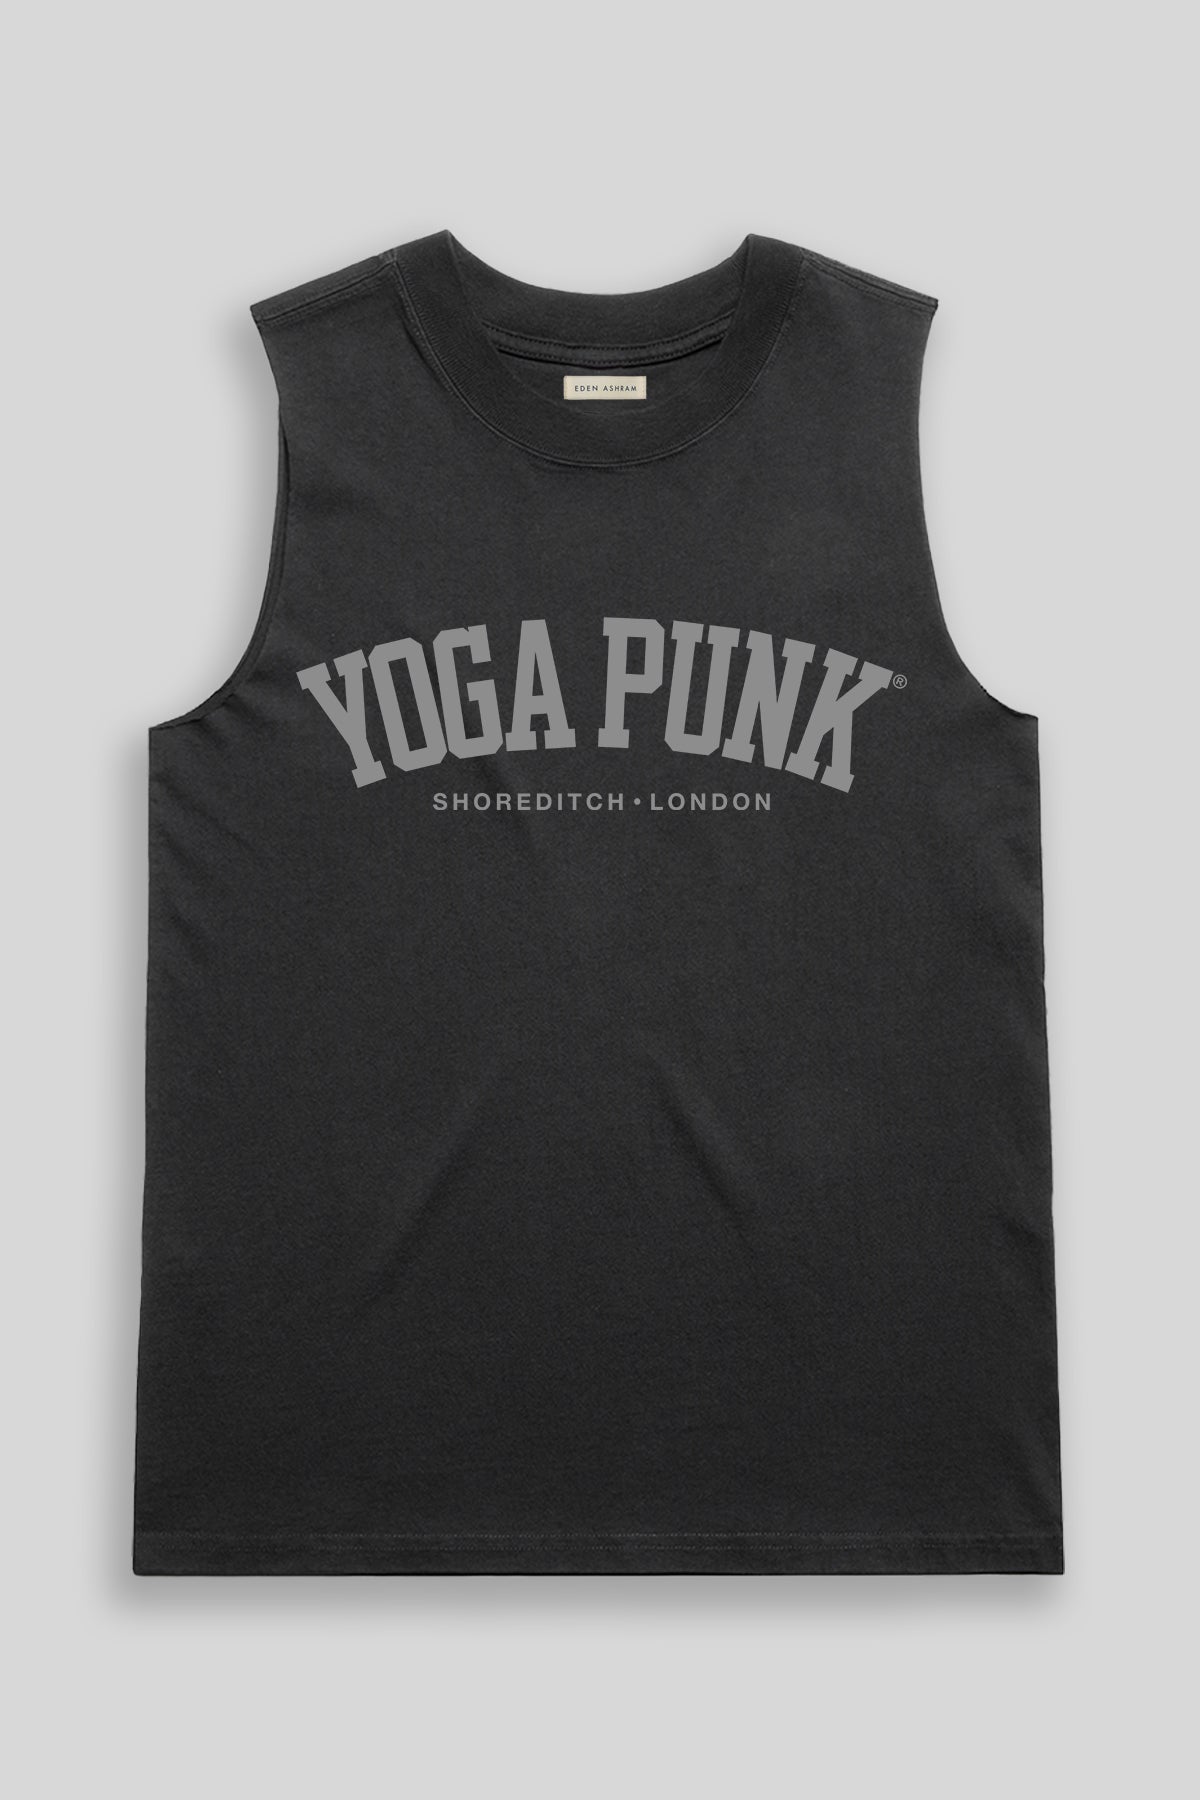 Eden Ashram Yoga Punk Faded Rocker Tank Faded Black